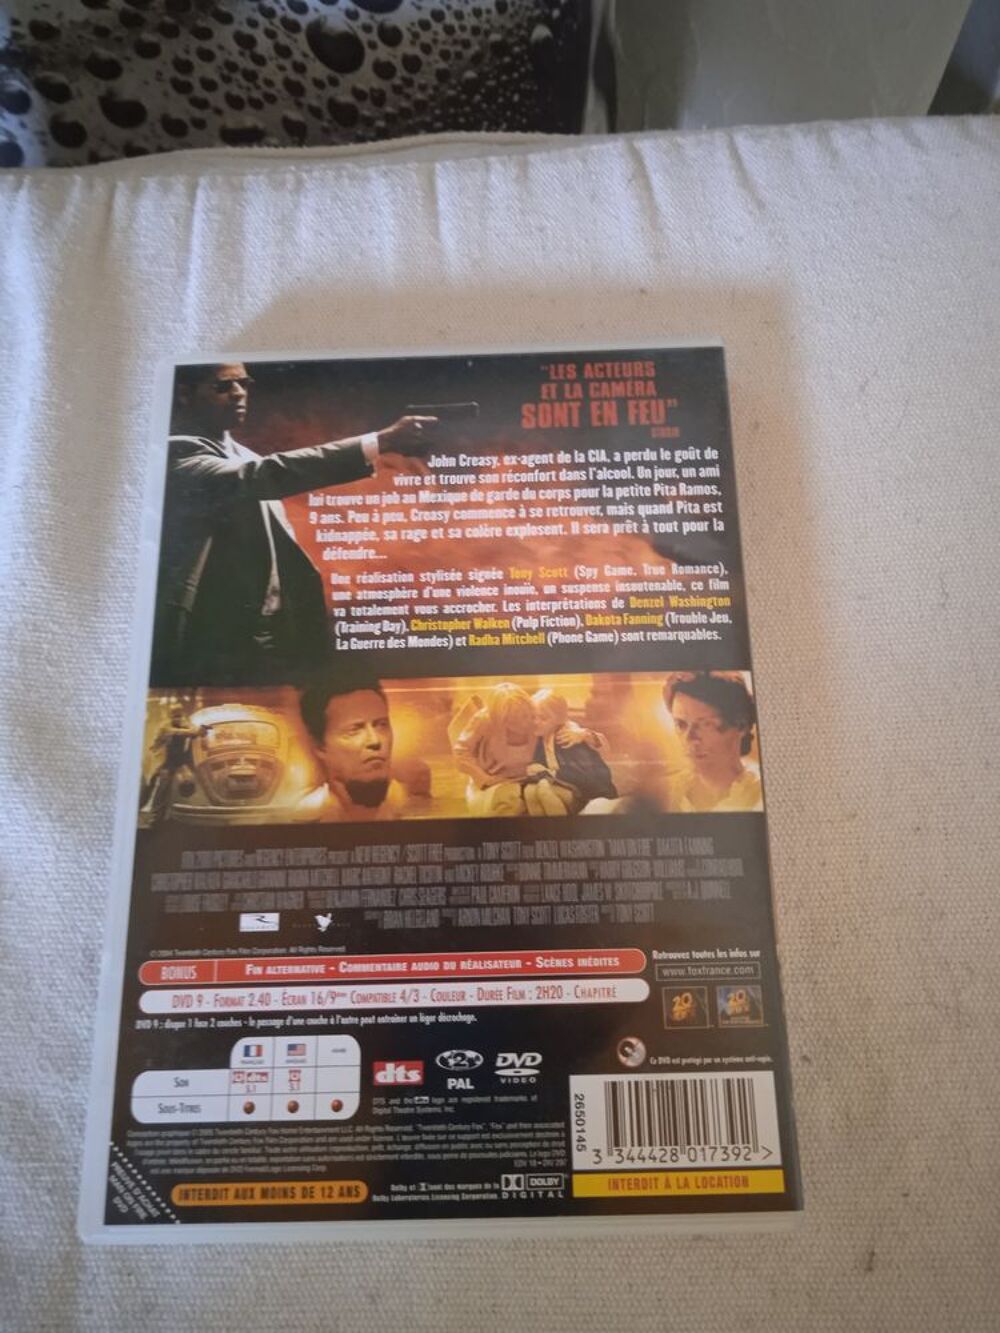 DVD Man on Fire
2004
Excellent &eacute;tat
En Fran&ccedil;ais
Multi lan DVD et blu-ray